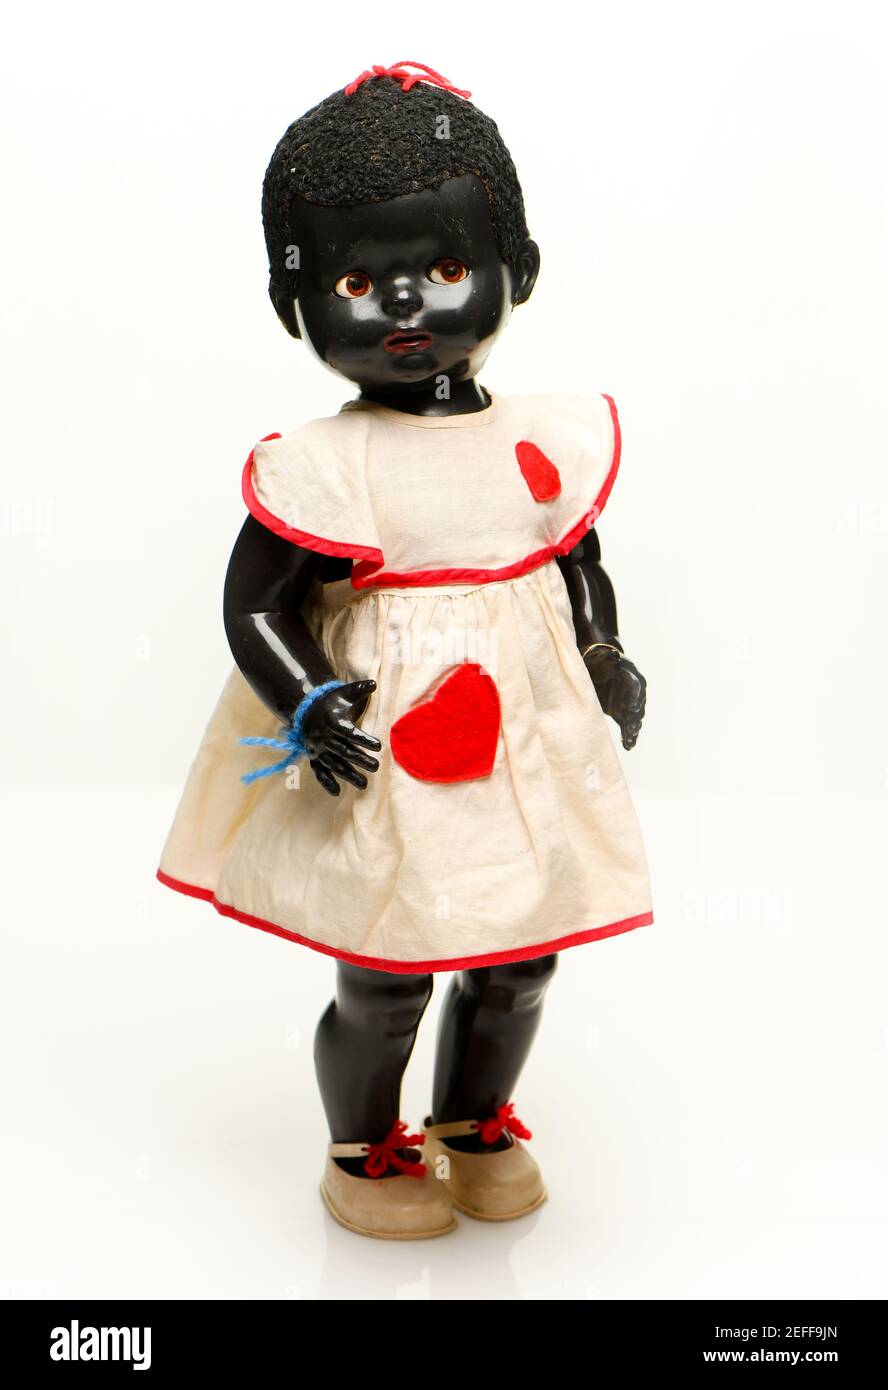 Mini muñeca hinchable negra - Up doll pequeña